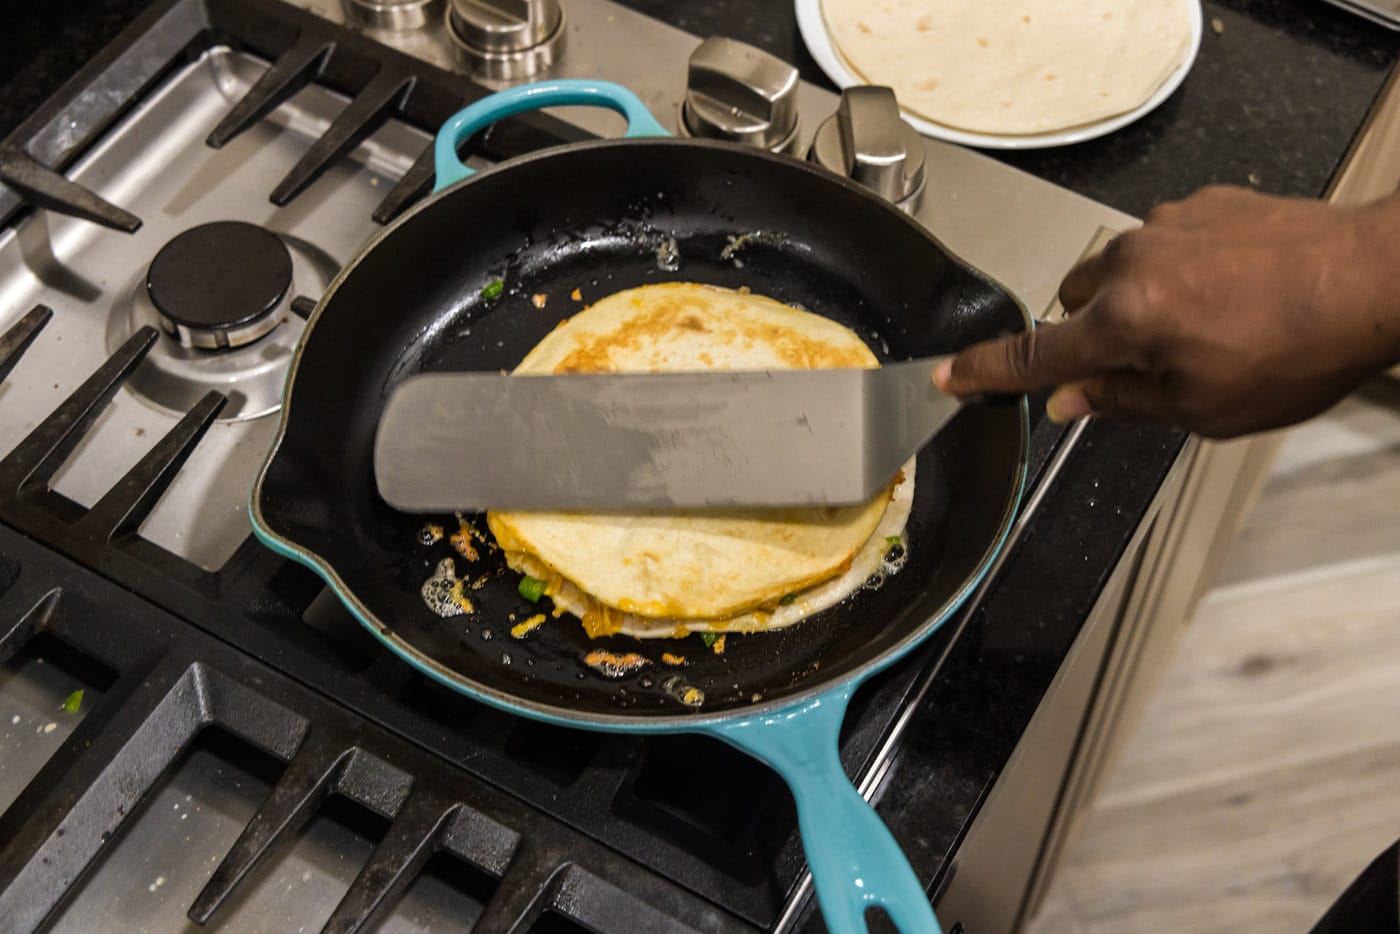 spatula pressing down on quesadilla in a skillet